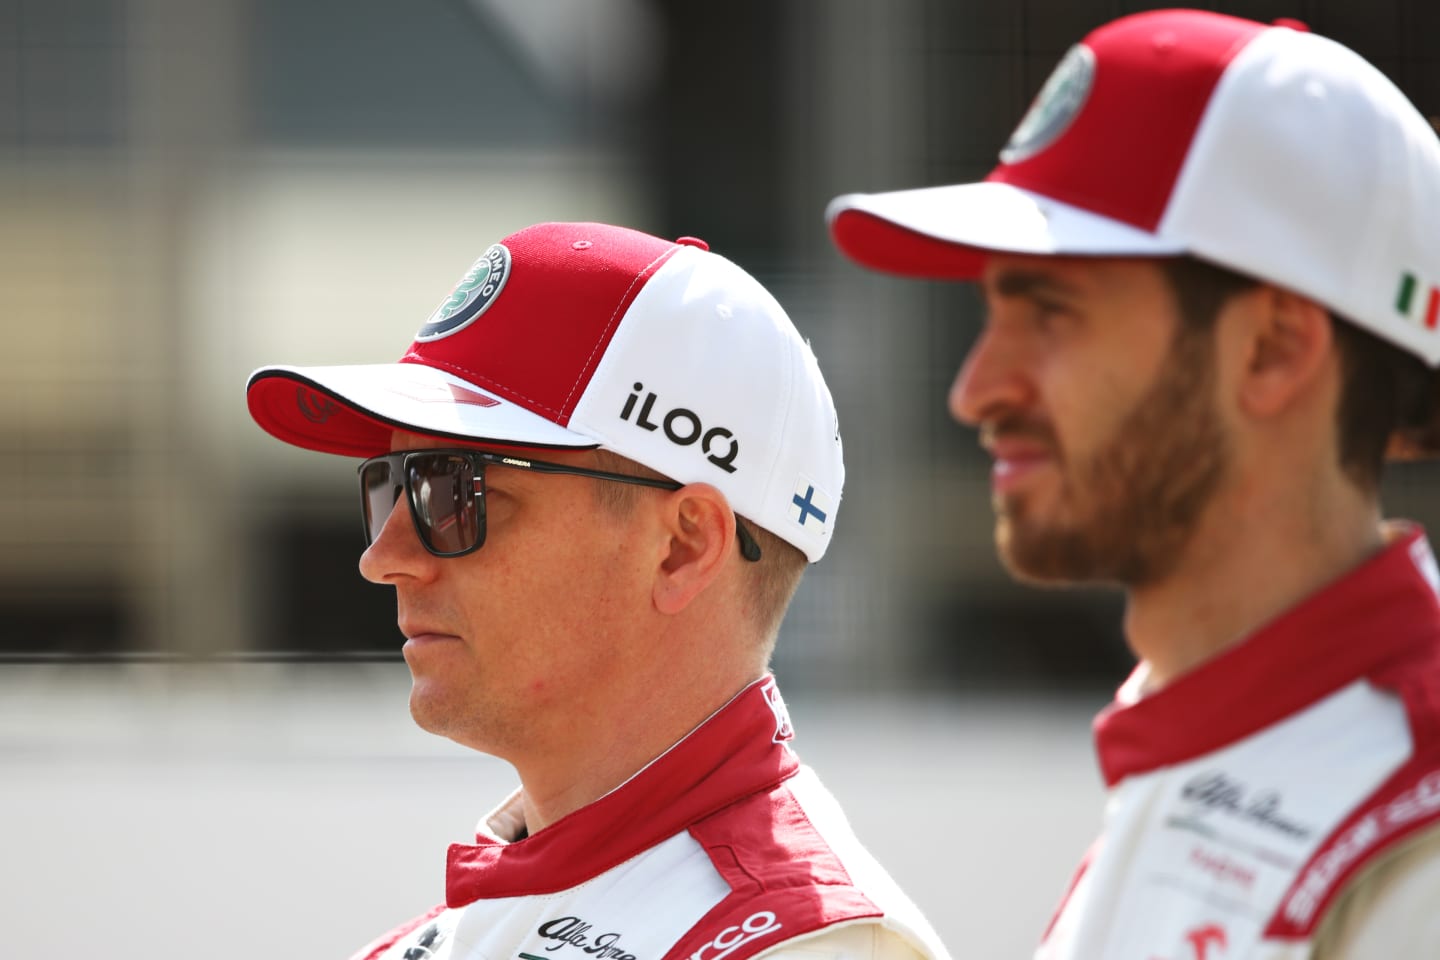 BAHRAIN, BAHRAIN - MARCH 12: Antonio Giovinazzi of Italy and Alfa Romeo Racing and Kimi Raikkonen